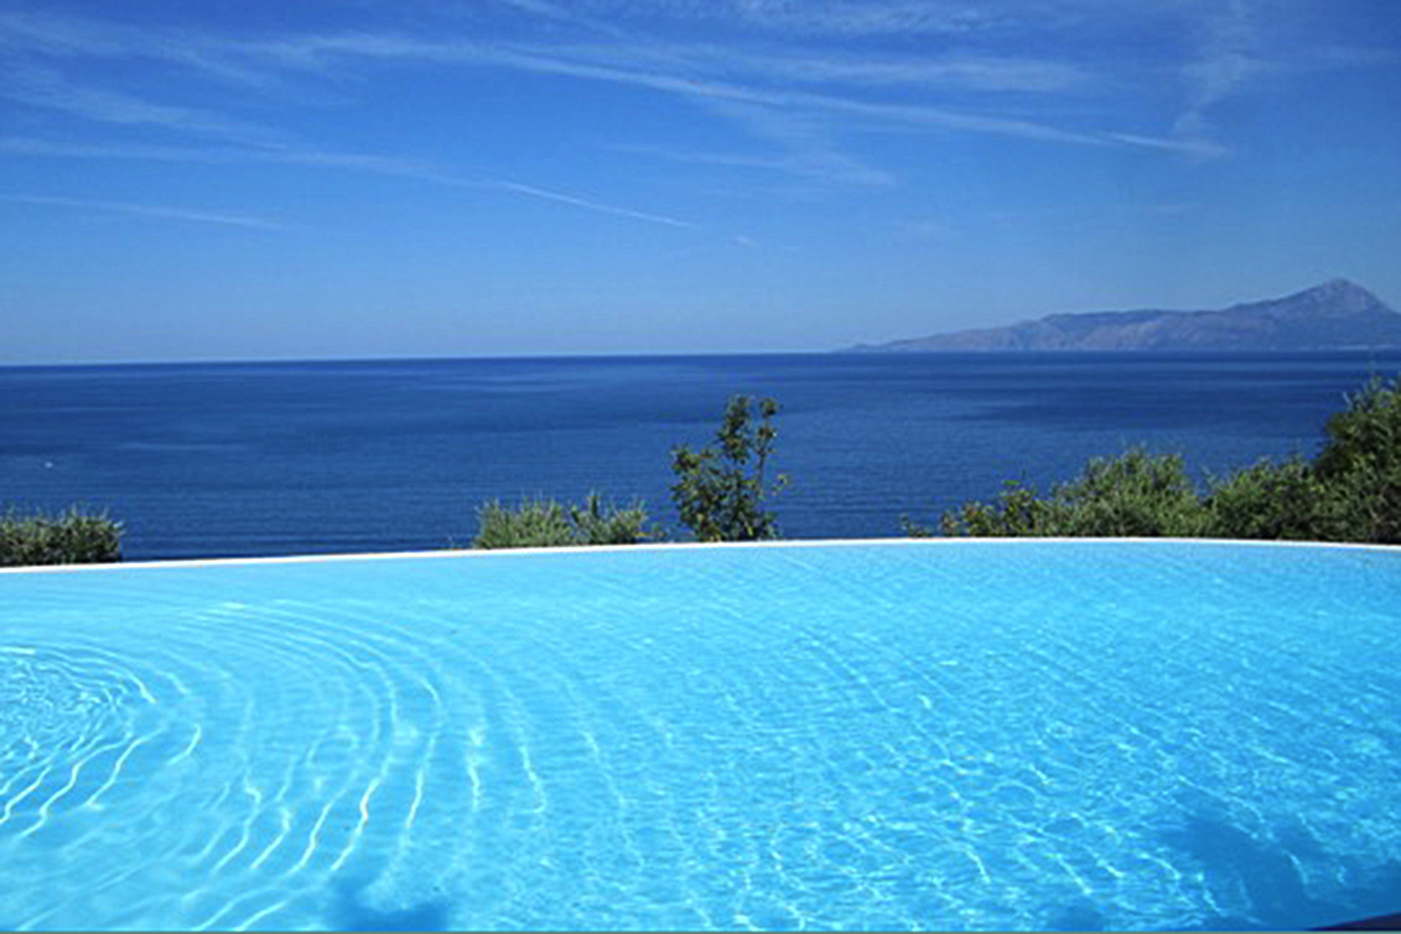 Holiday rental villa overlooking the ocean in Basilicata Italy